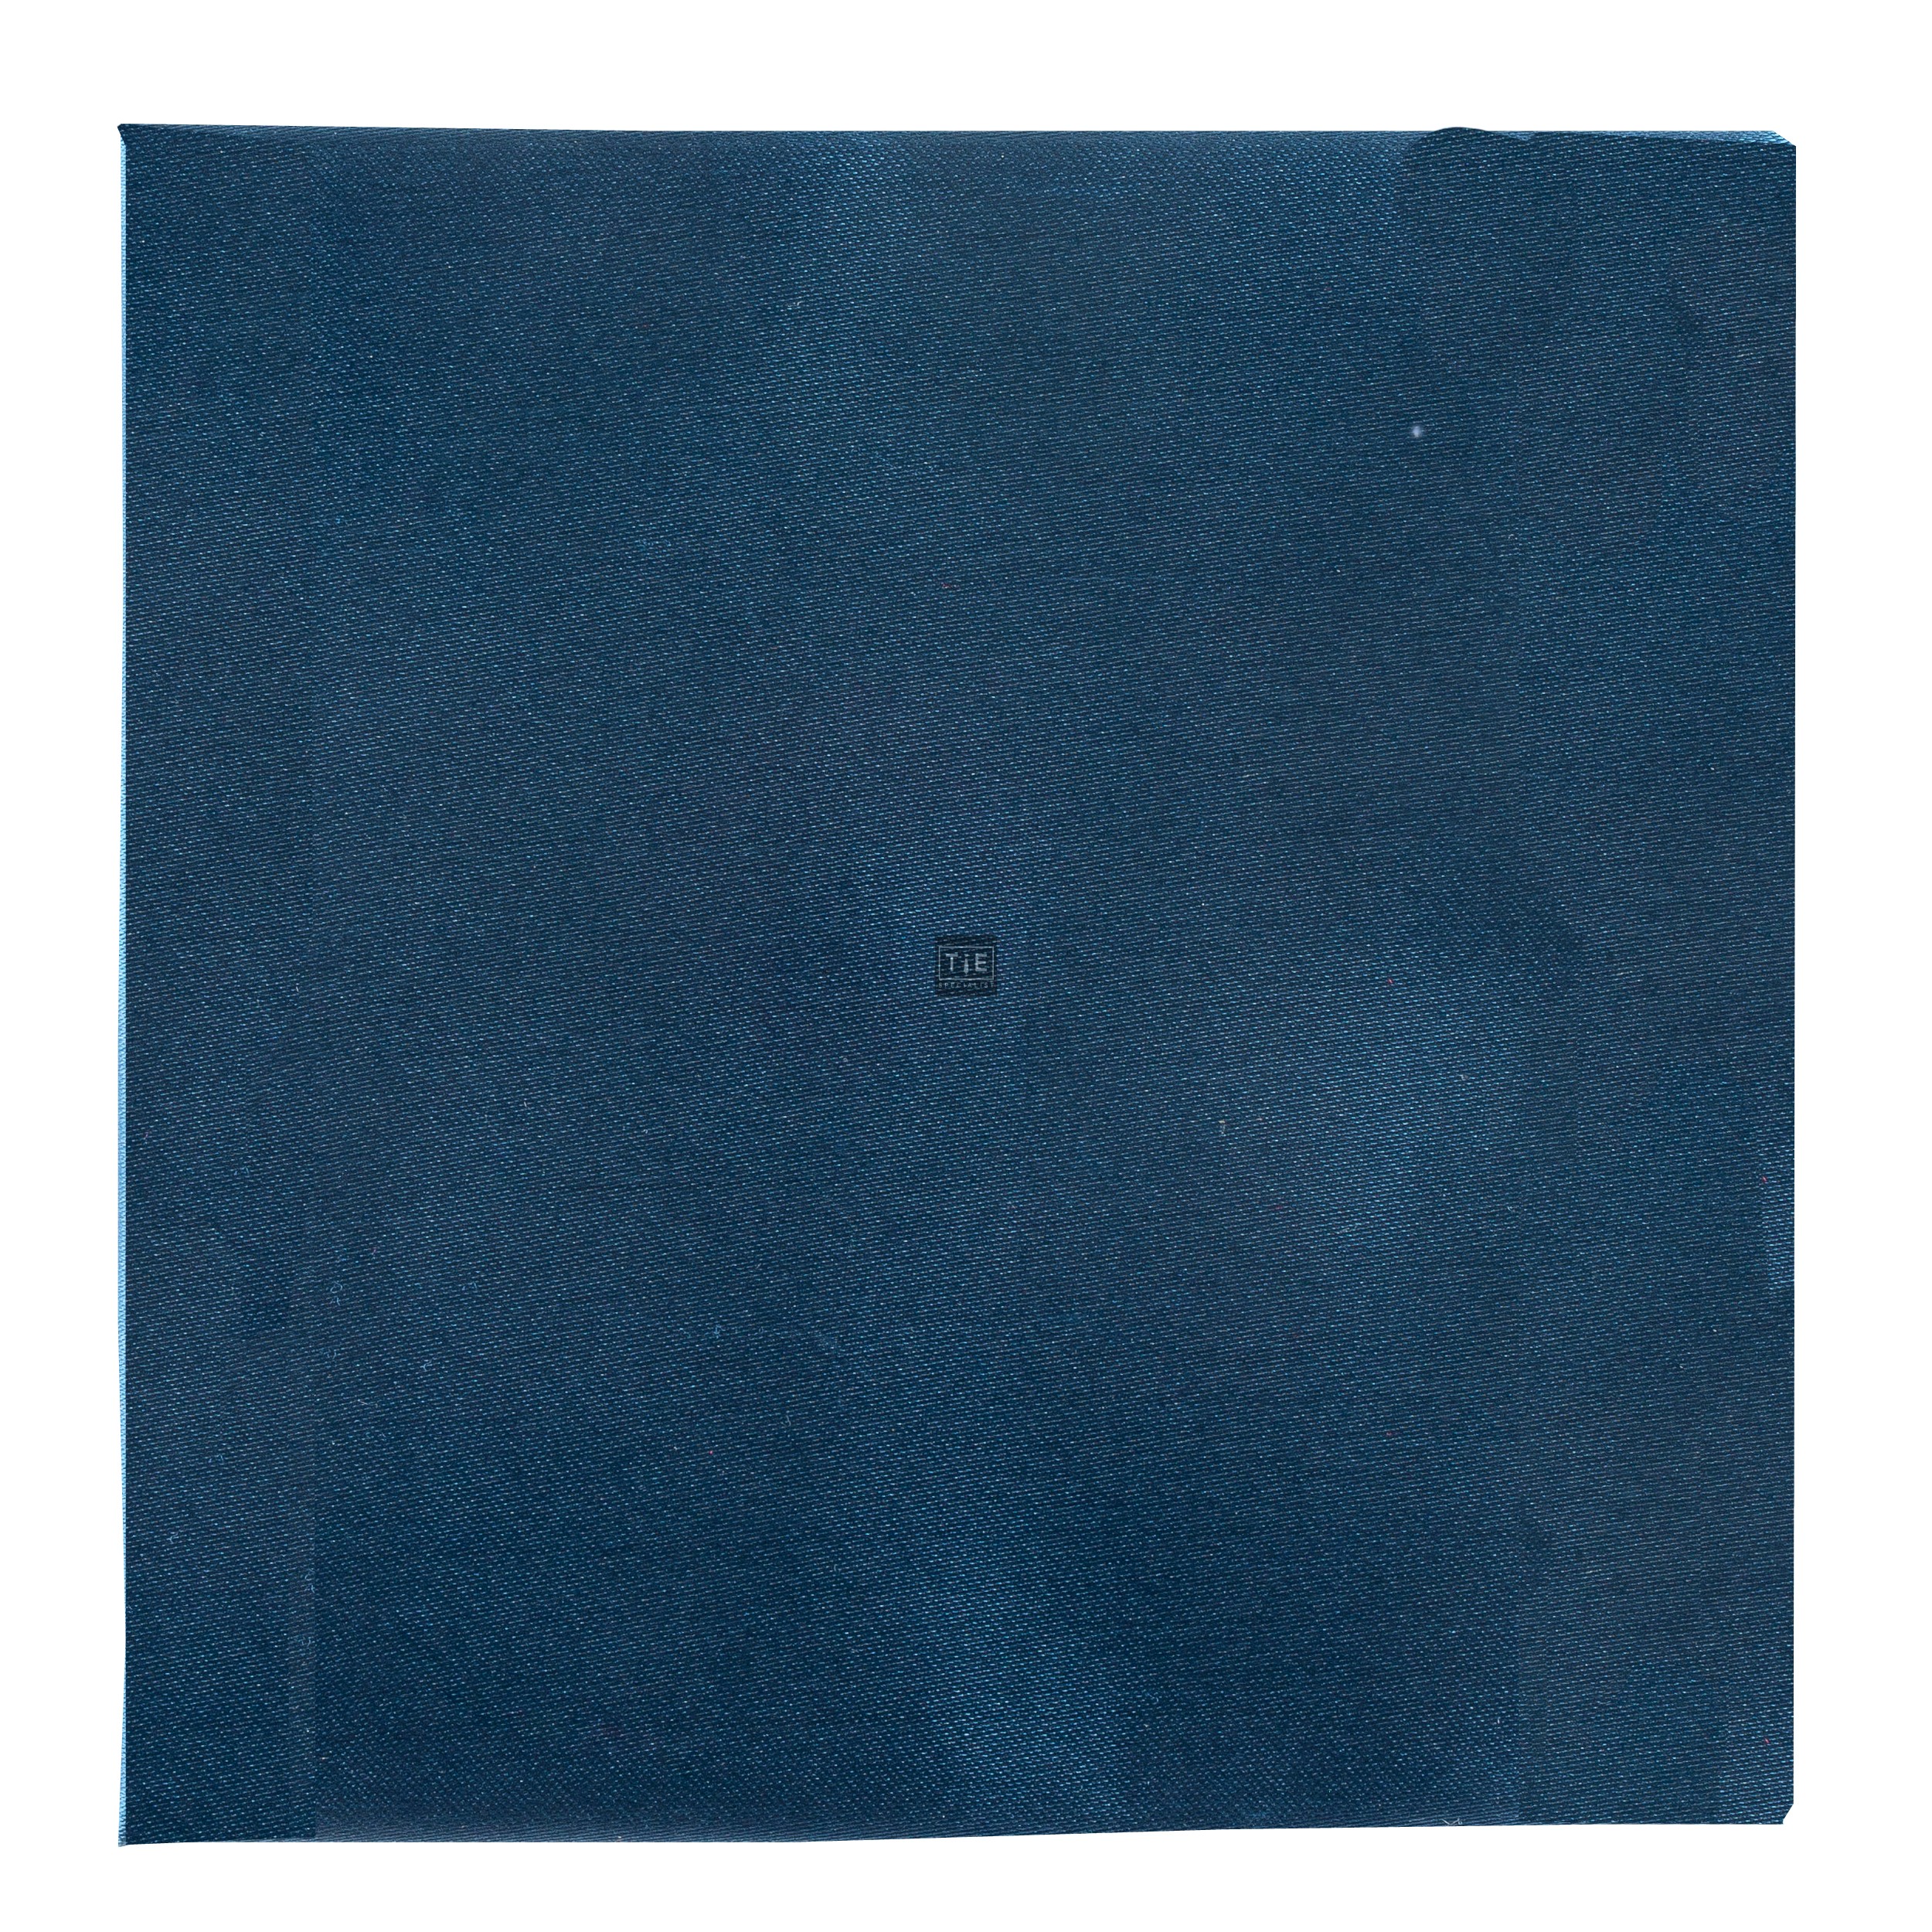 Airforce Blue Satin Pocket Square #TPH1883/6